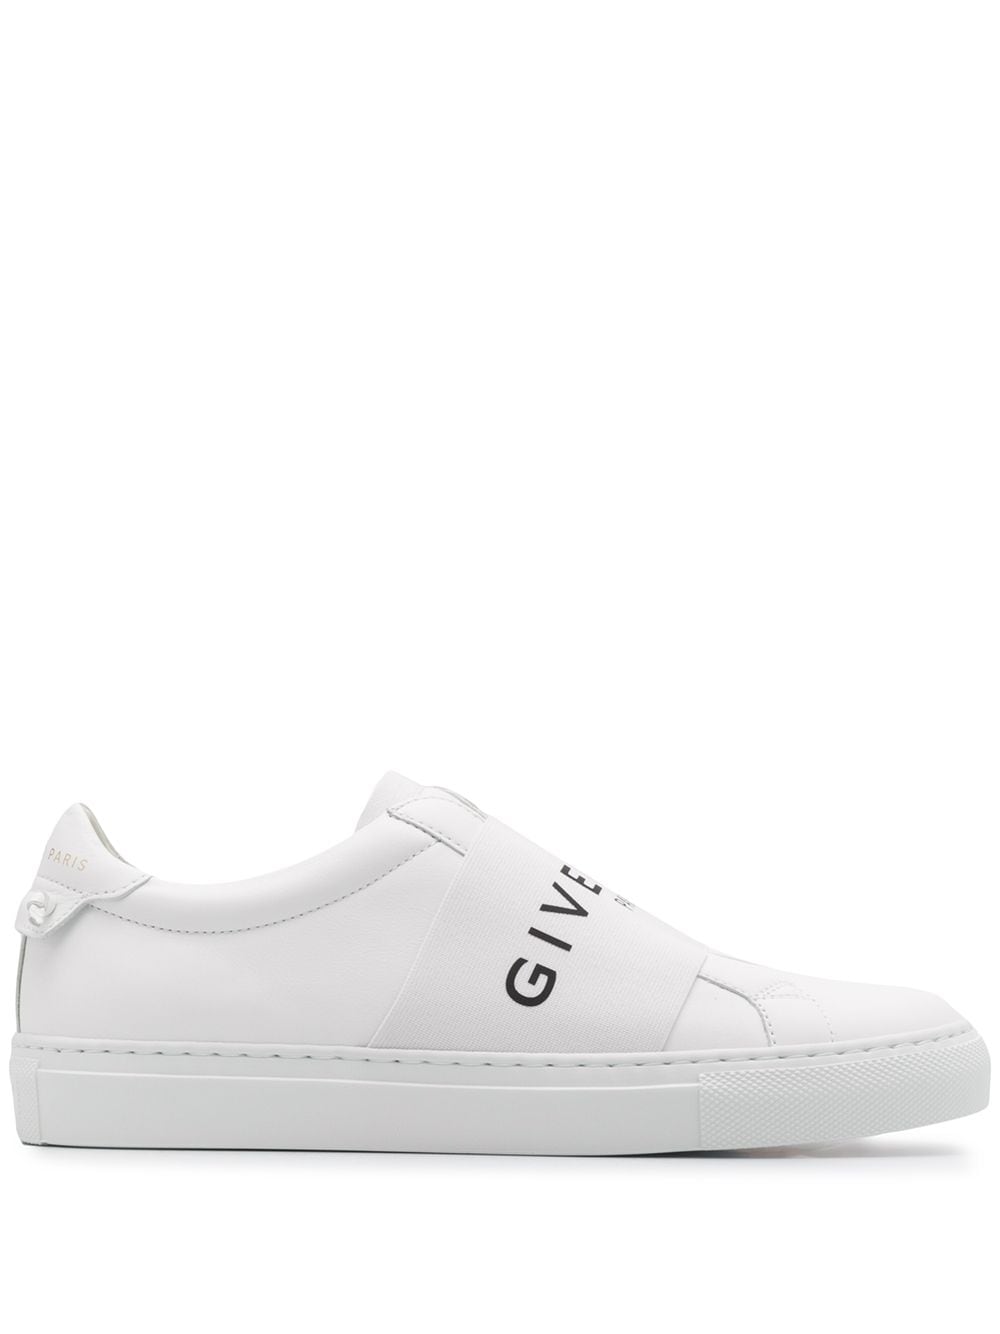 Urban Street Sneakers дамски обувки Givenchy 842243315_35_5